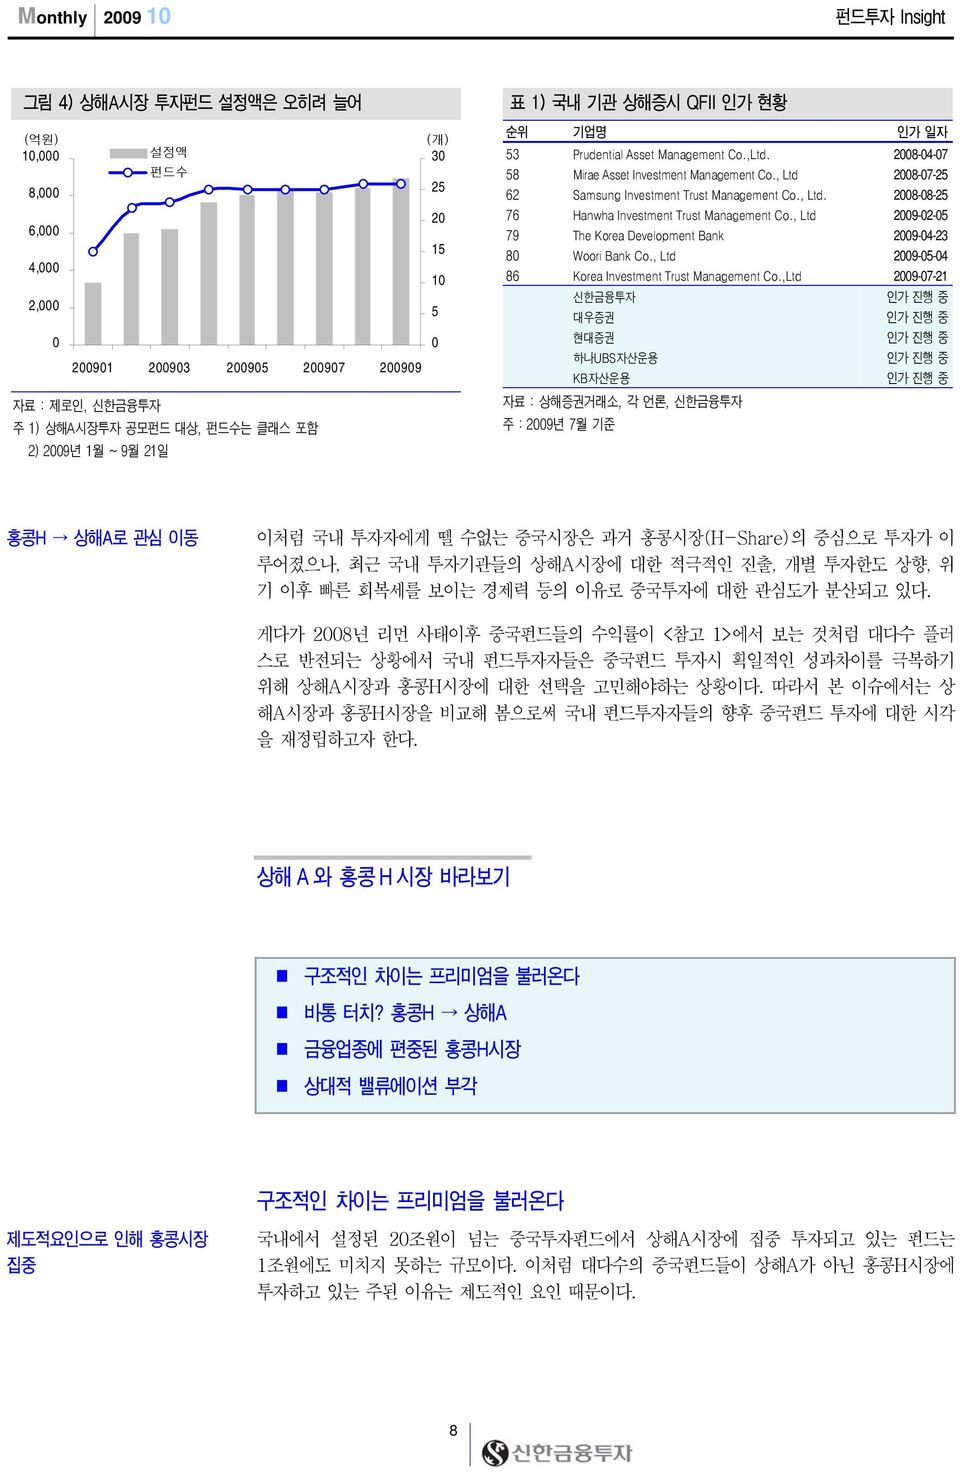 , Ltd 29-2-5 79 The Korea Development Bank 29-4-23 8 Woori Bank Co., Ltd 29-5-4 86 Korea Investment Trust Management Co.